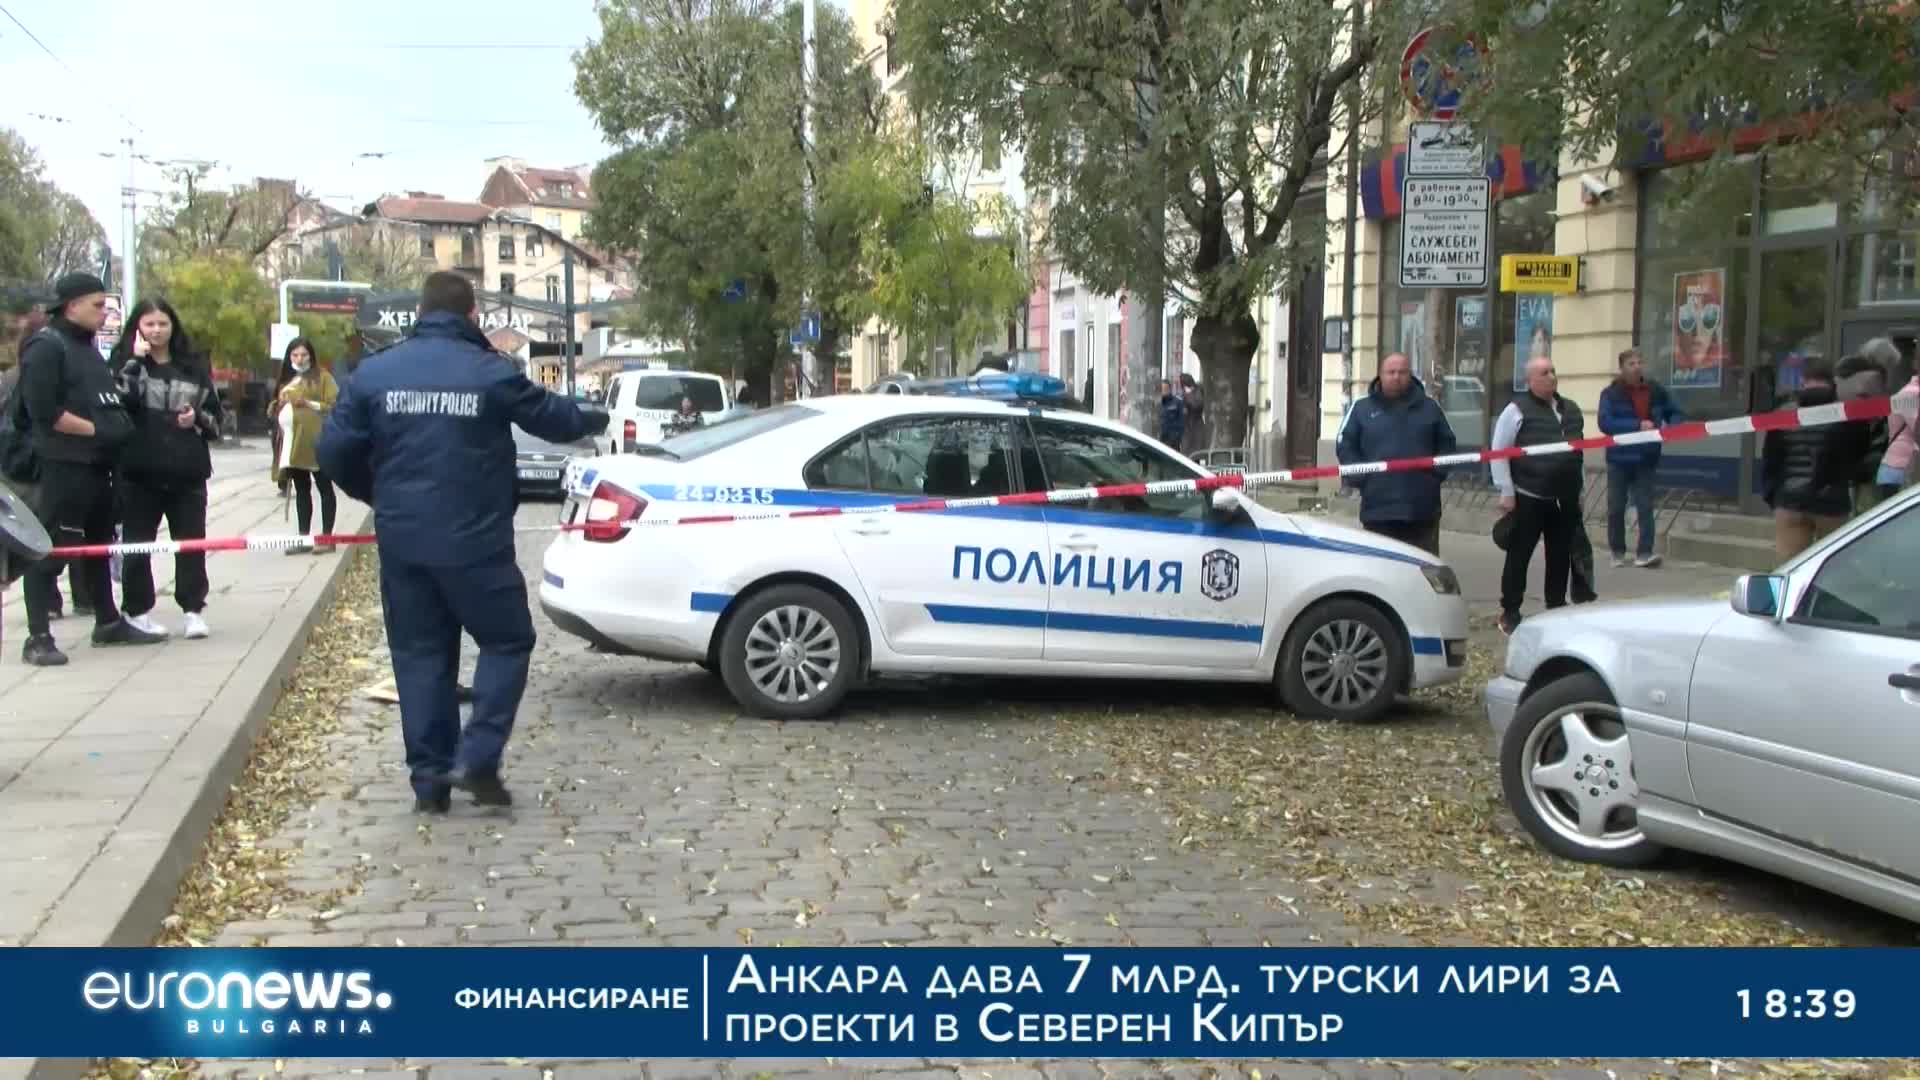 Убийство: Застреляха мъж в София